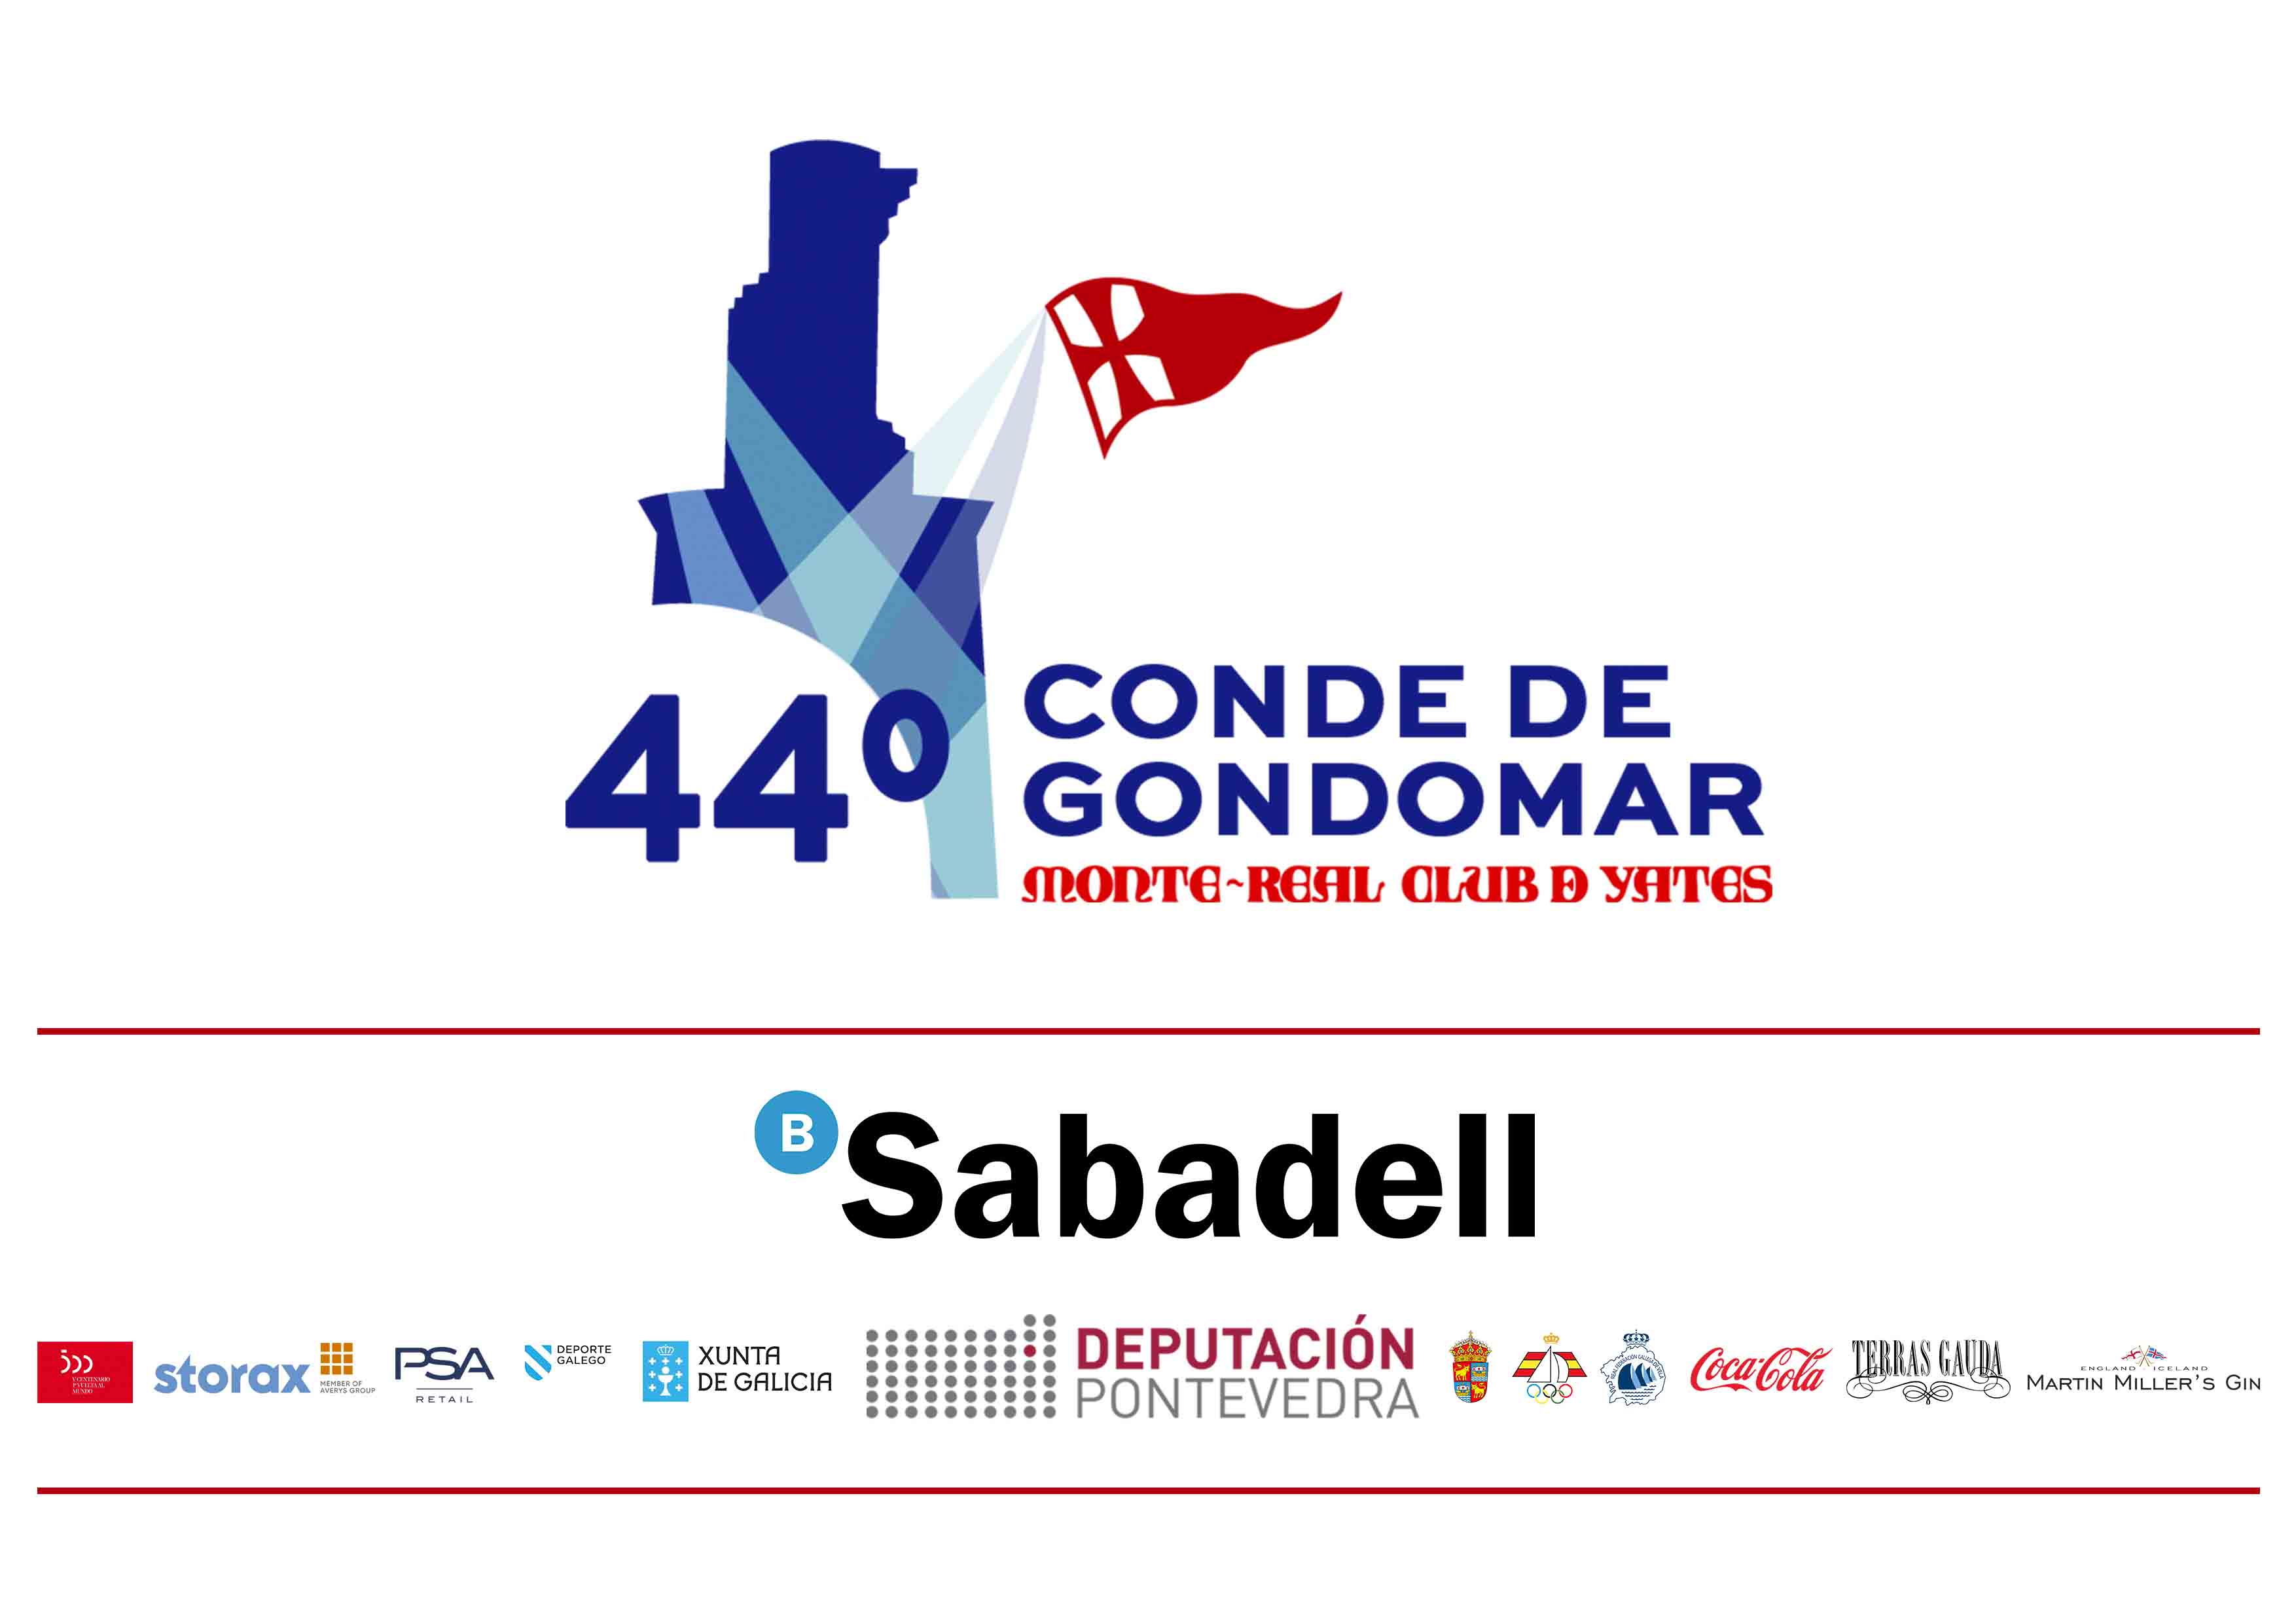 VIDEOS: 44º Conde de Gondomar (2019)